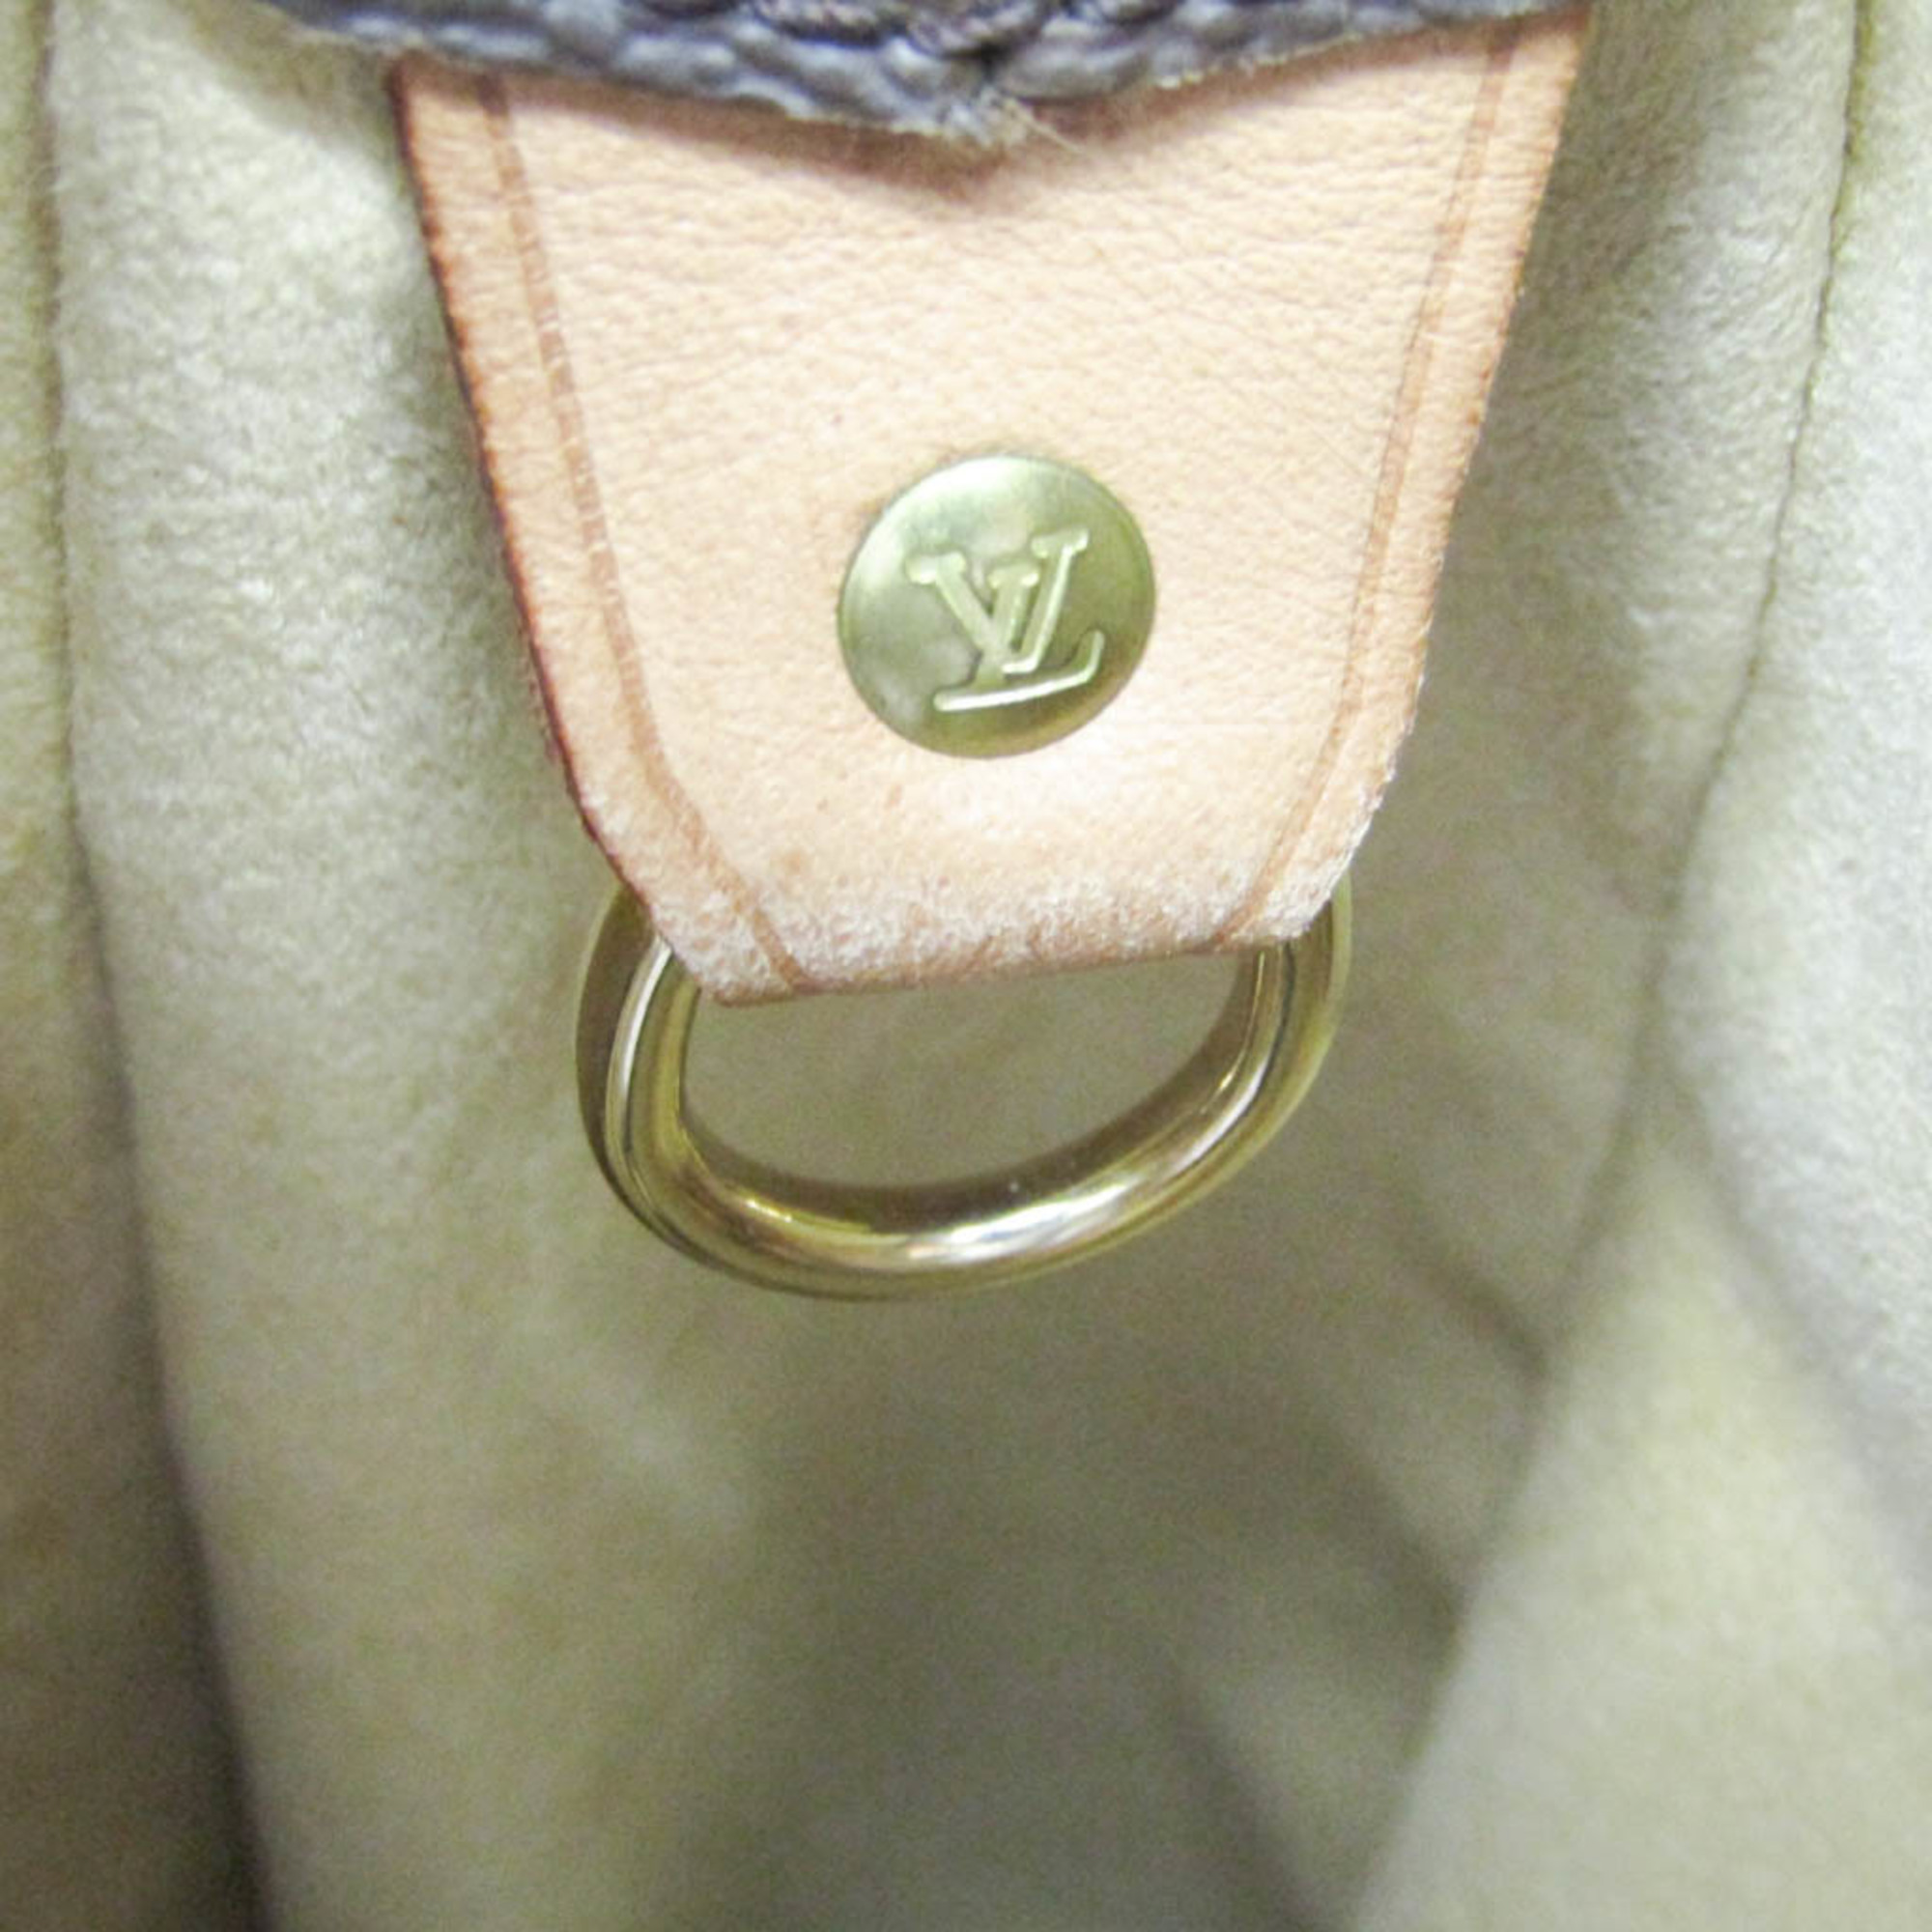 Louis Vuitton Monogram Looping GM M51145 Women's Shoulder Bag Monogram